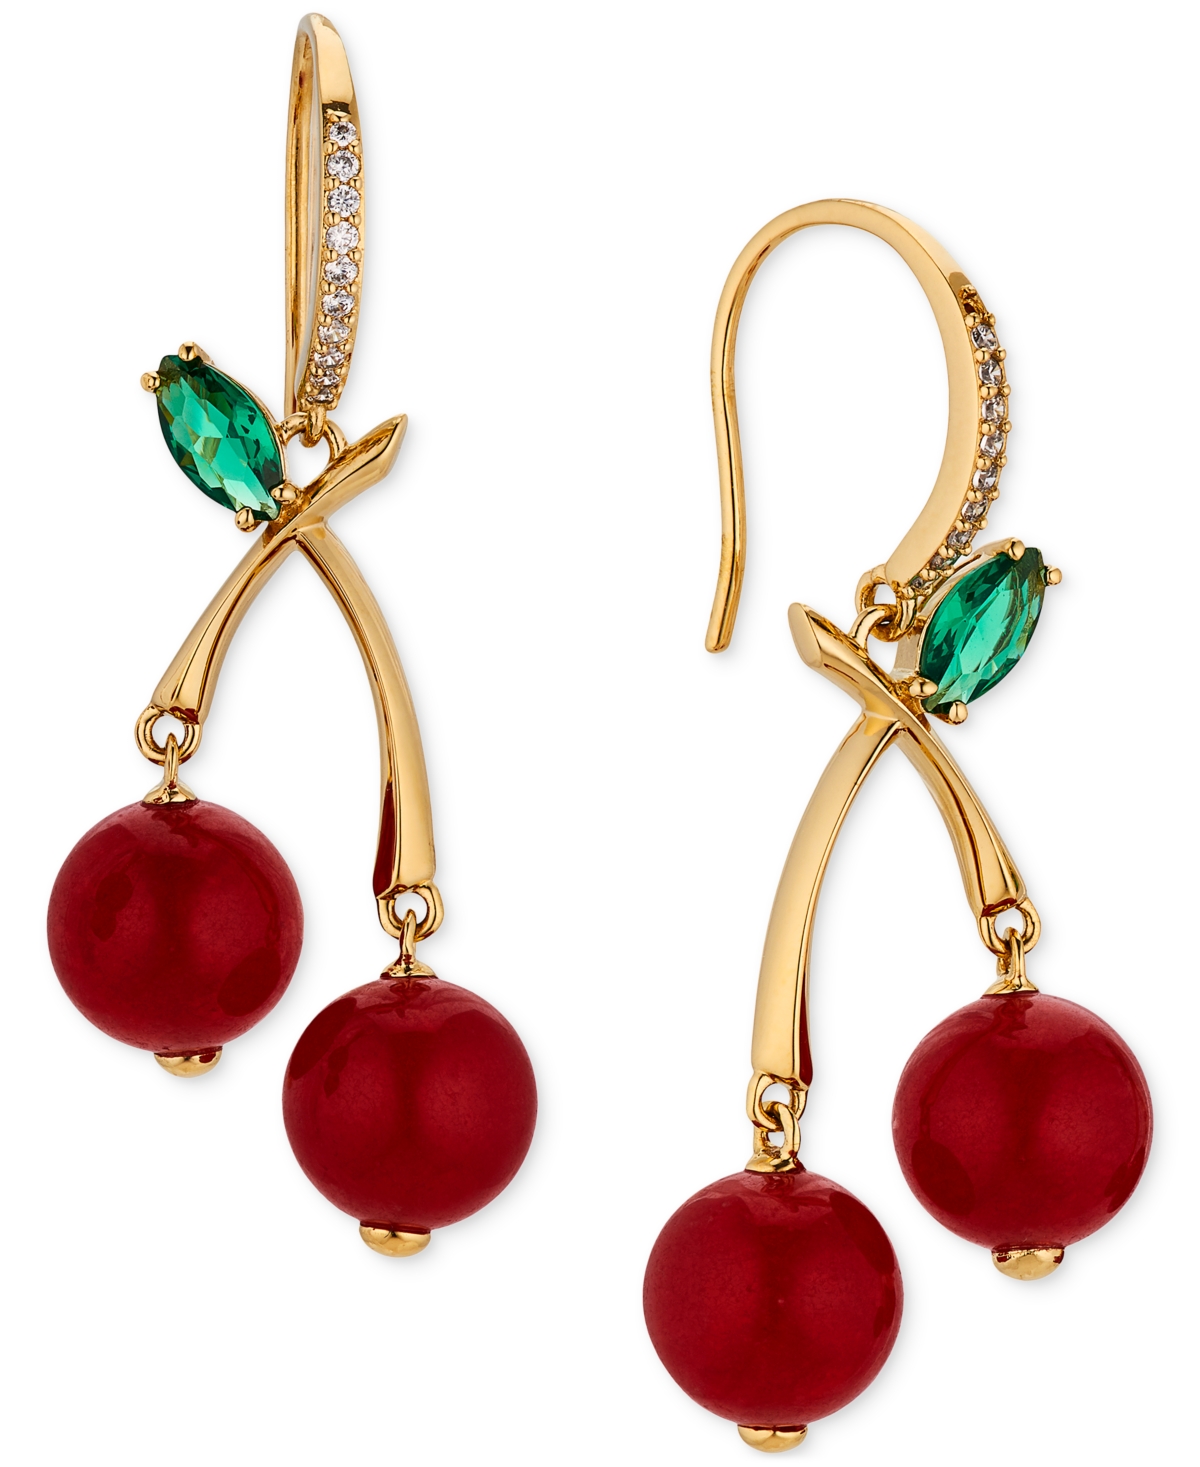 by Nadri 18k Gold-Plated Cubic Zirconia & Nano Stone Bead Cherry Drop Earrings - Gold